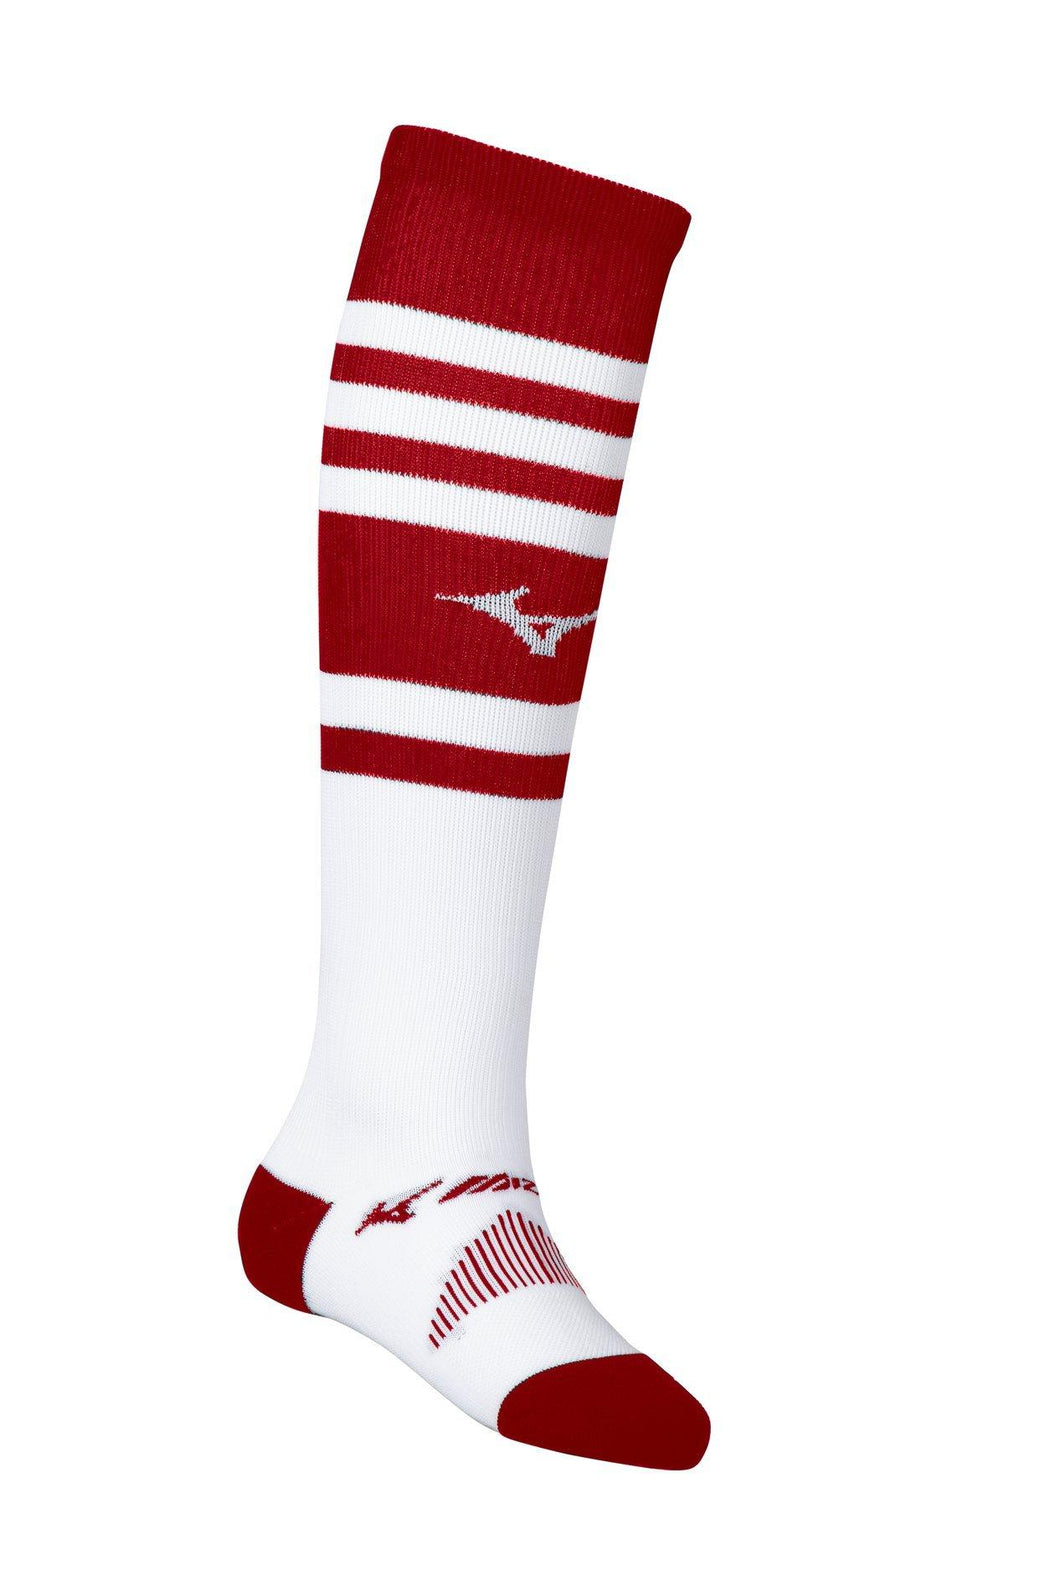 Mizuno Over The Calf Performance Socks - Red / White